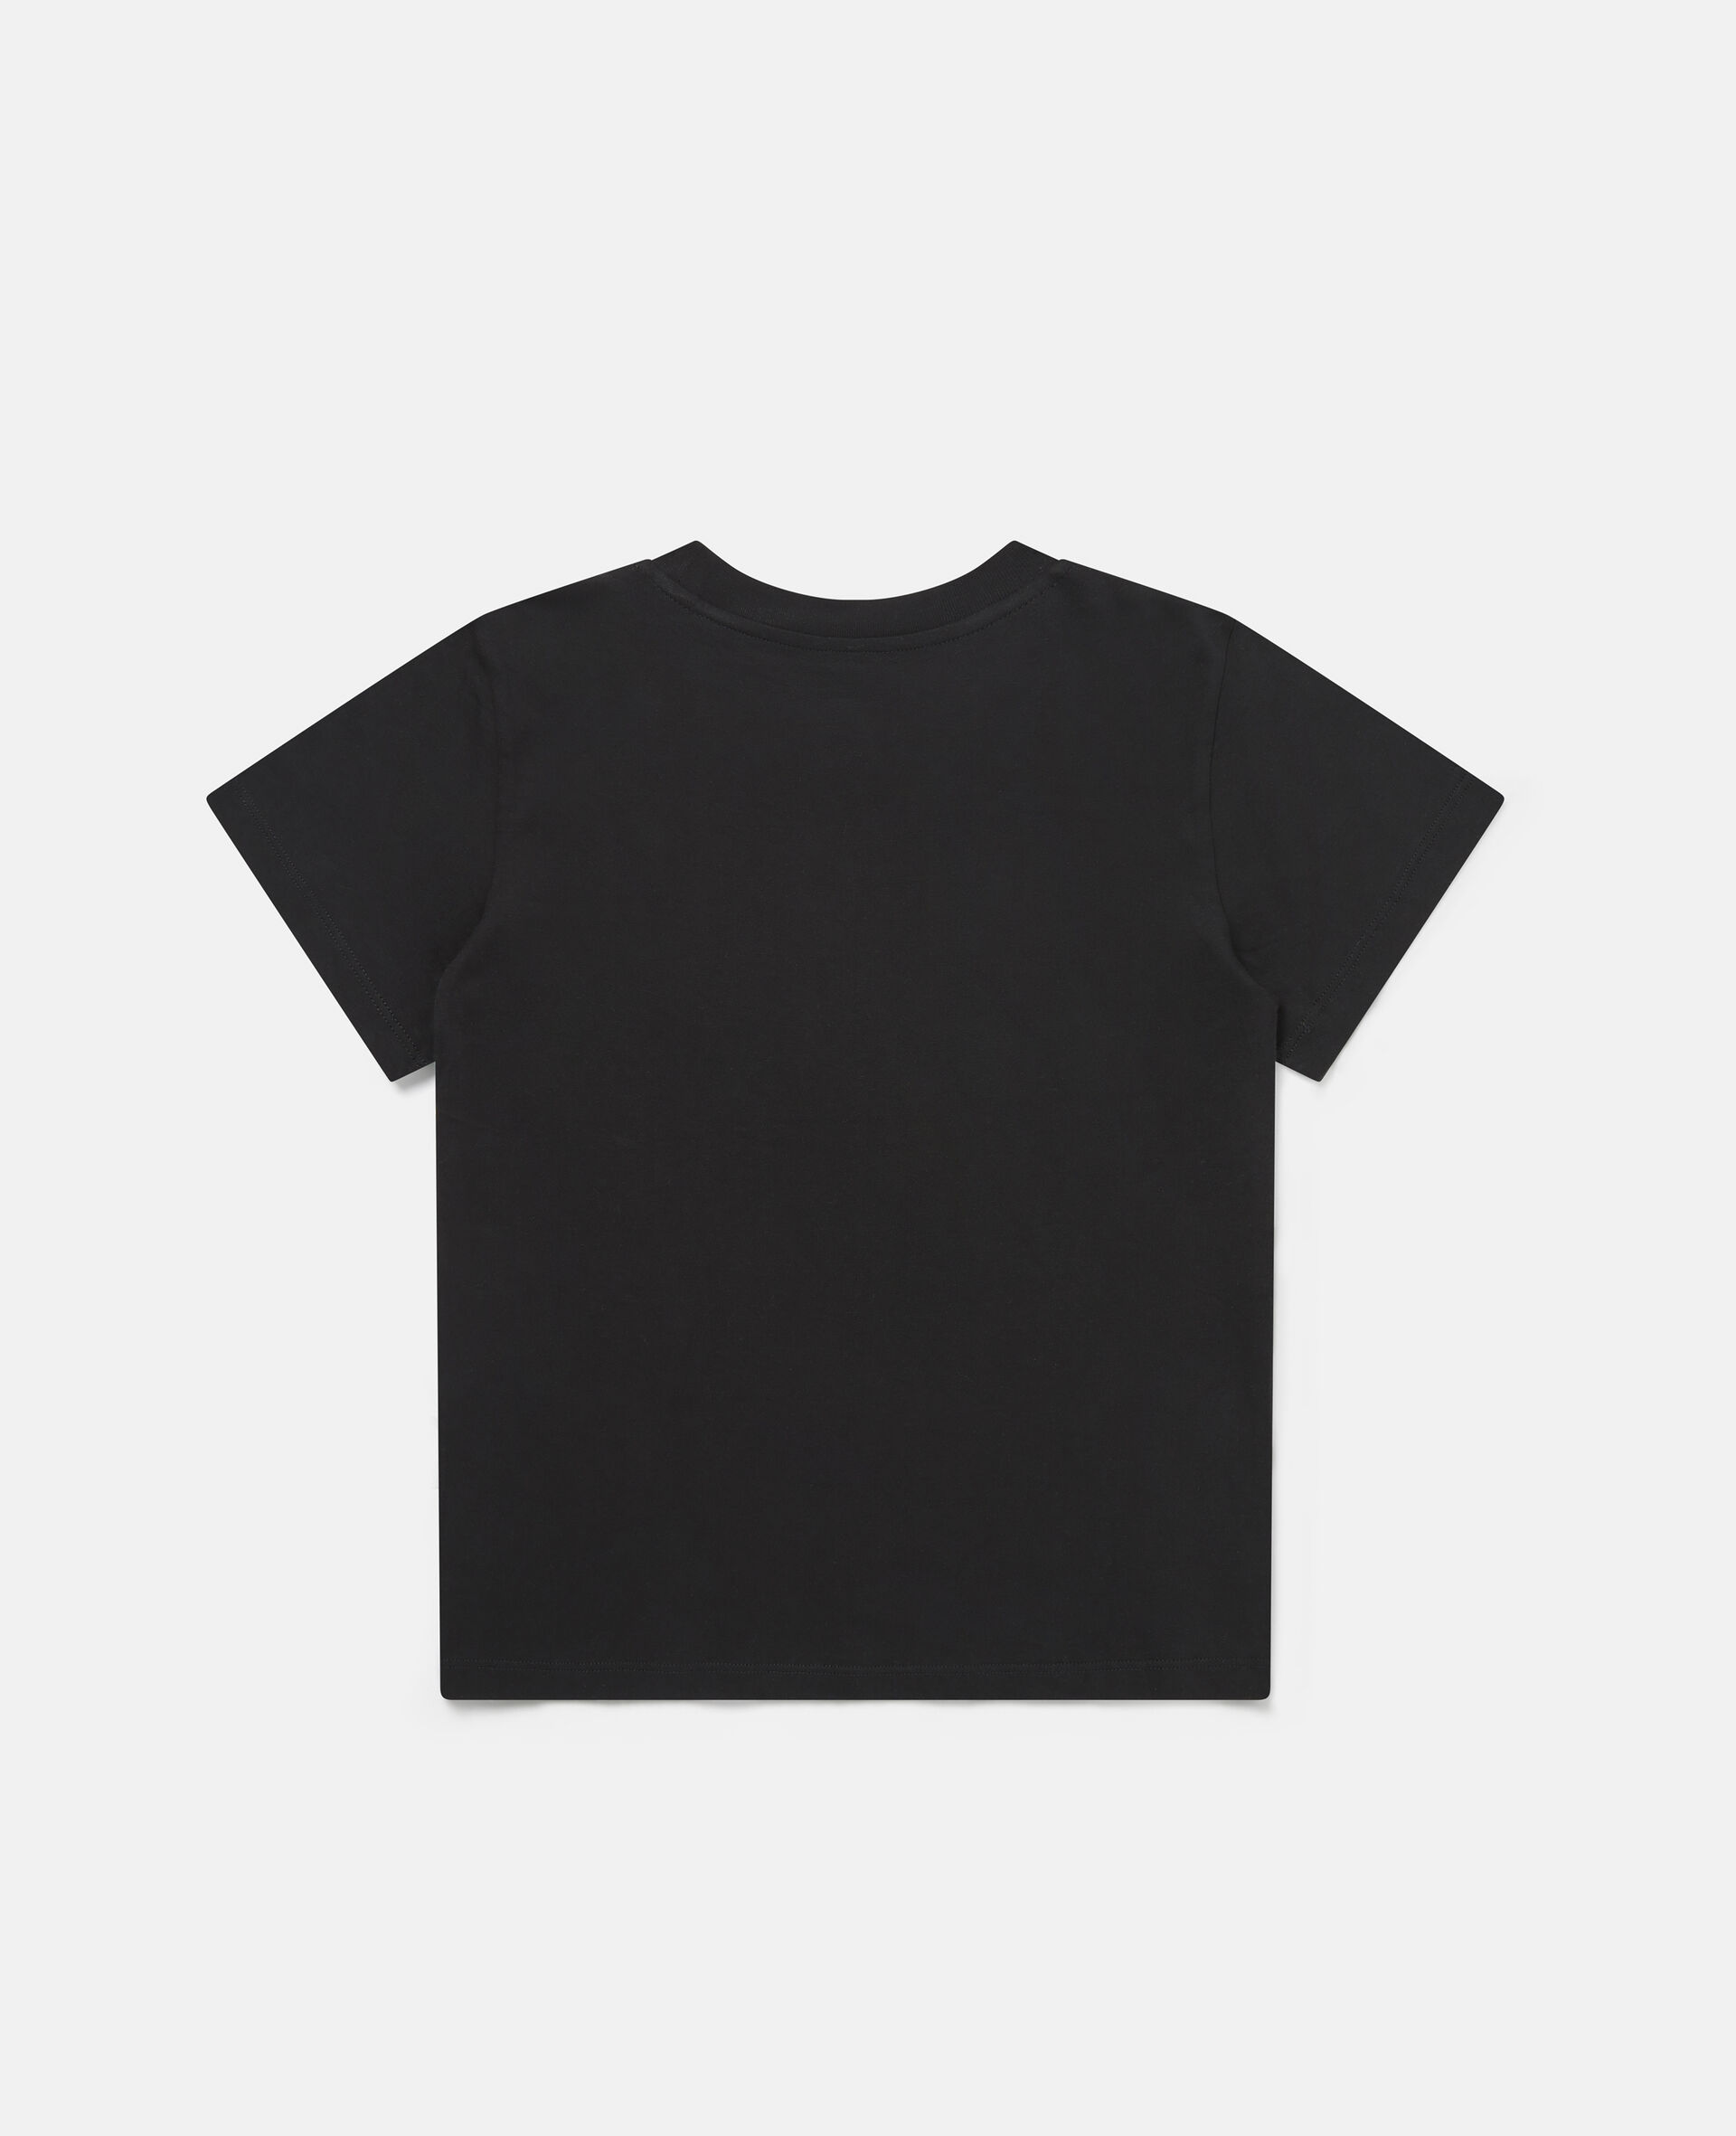 Desert Print Cotton T-Shirt -Black-large image number 2